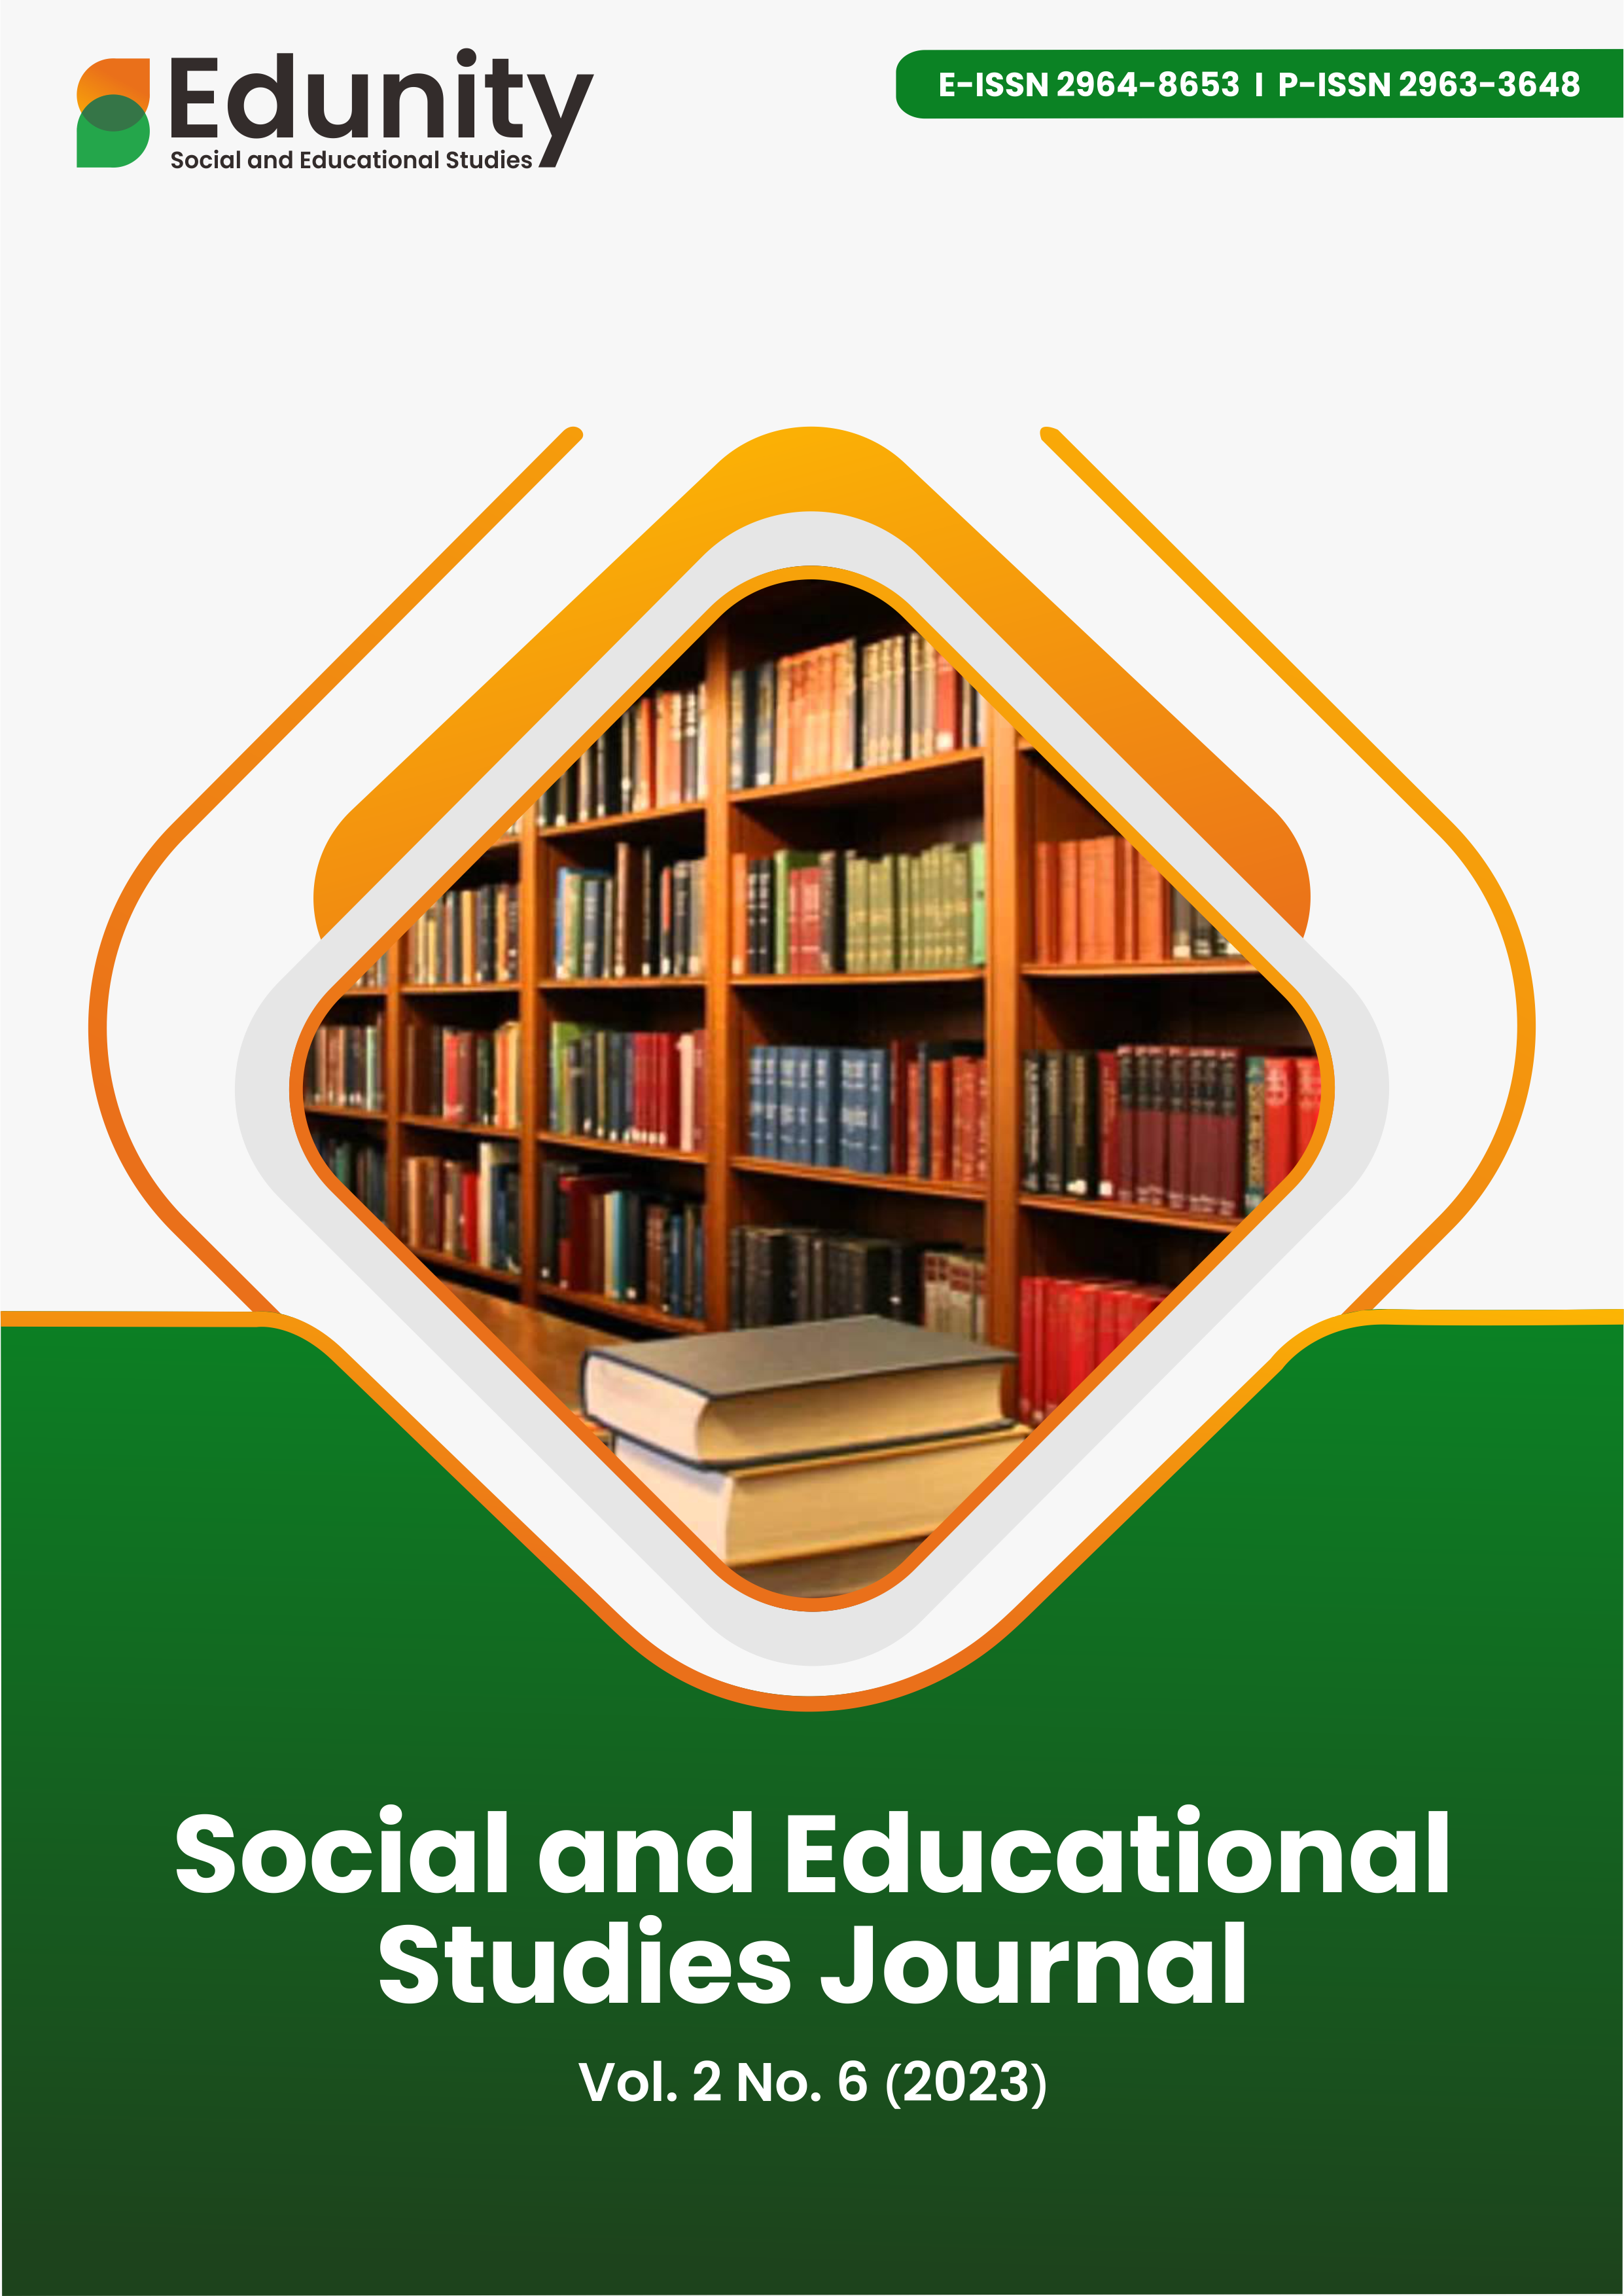 					View Vol. 2 No. 6 (2023): Edunity : Social and Educational Studies
				